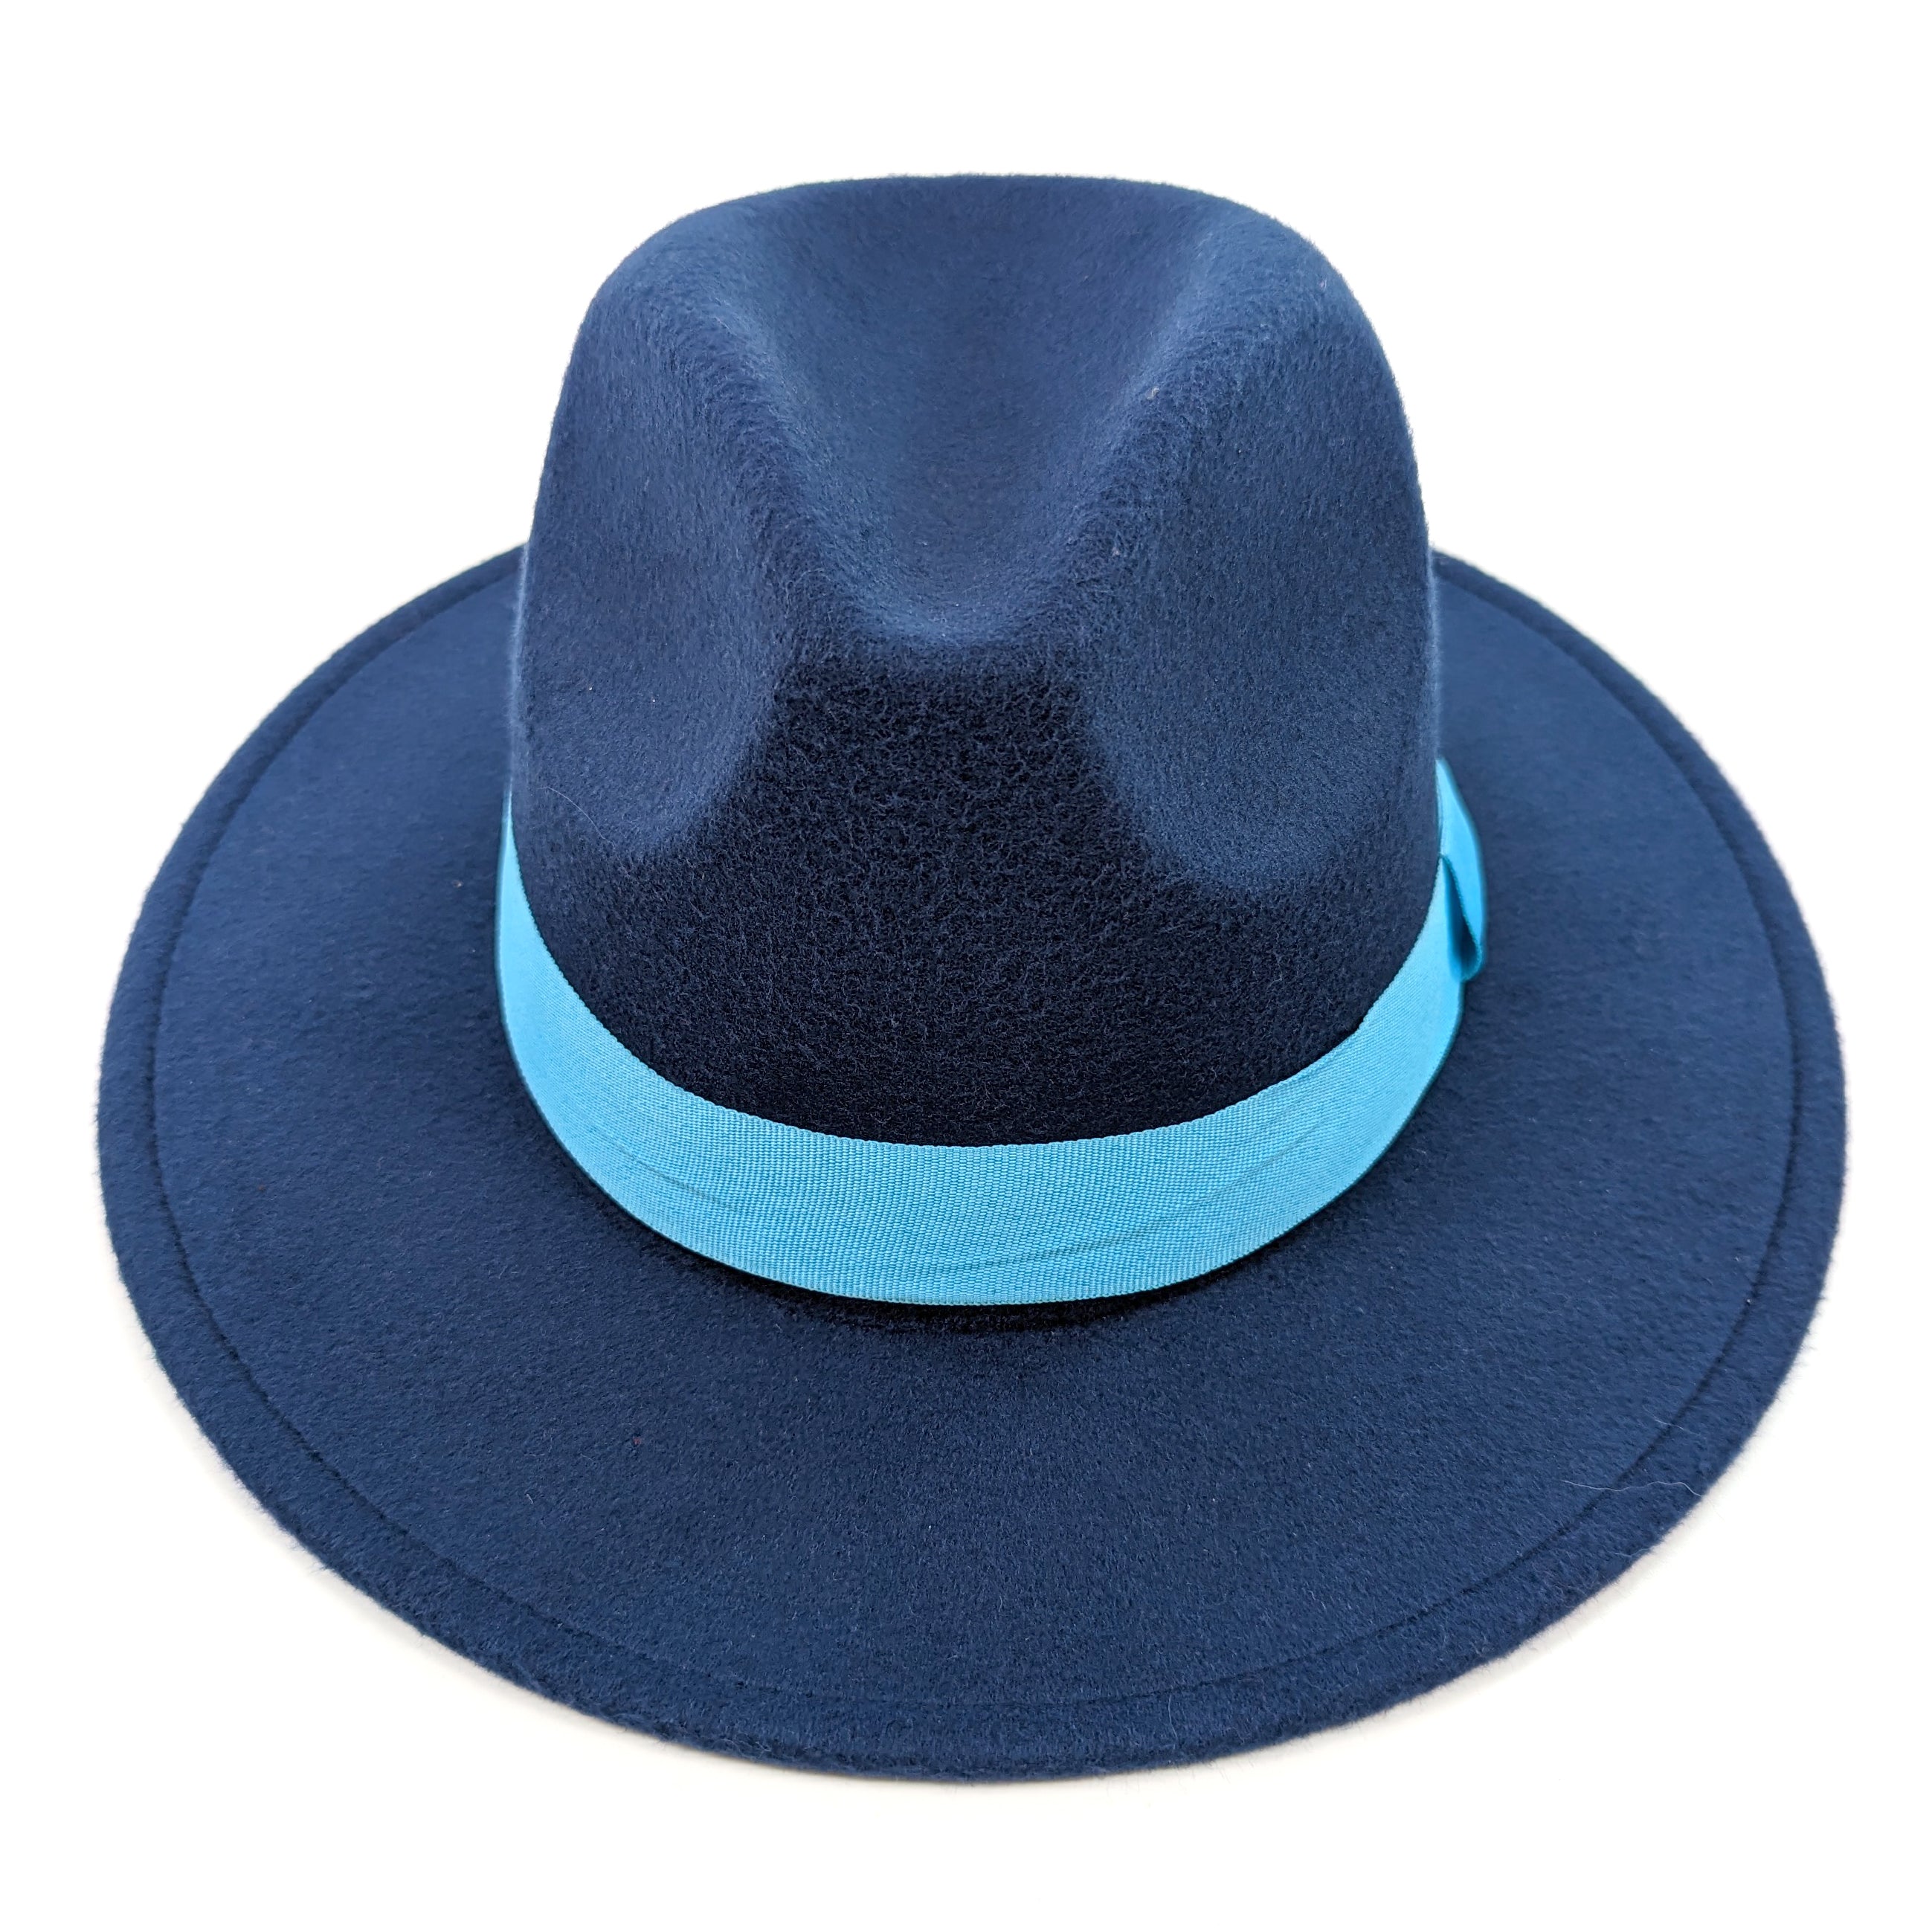 Navy Blue Fedora Hat - Royal Blue Band